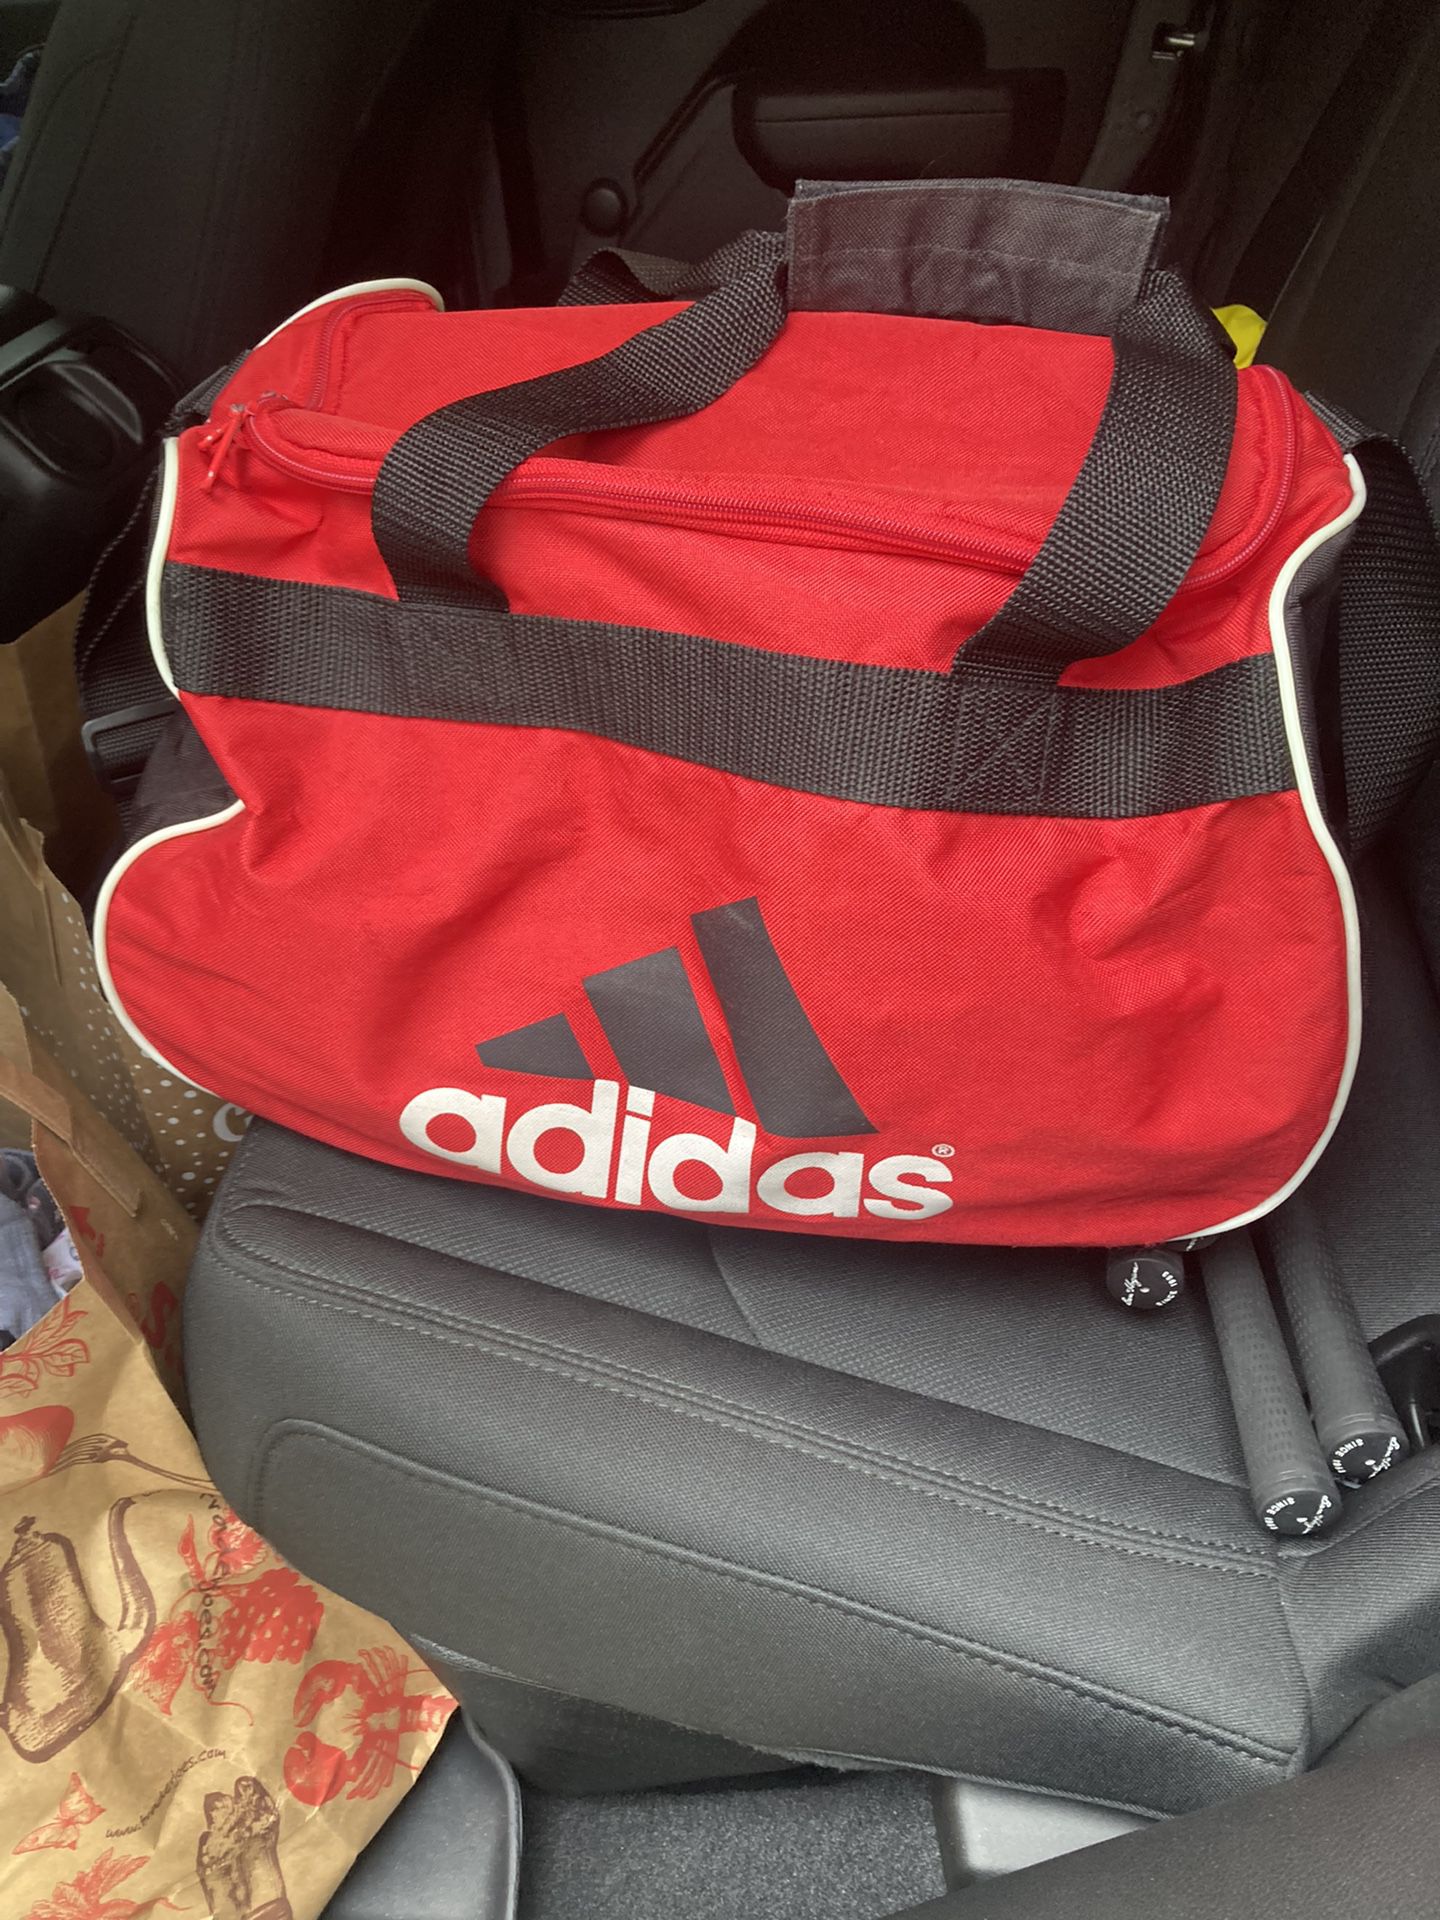 Red Adidas Duffle Bag Small